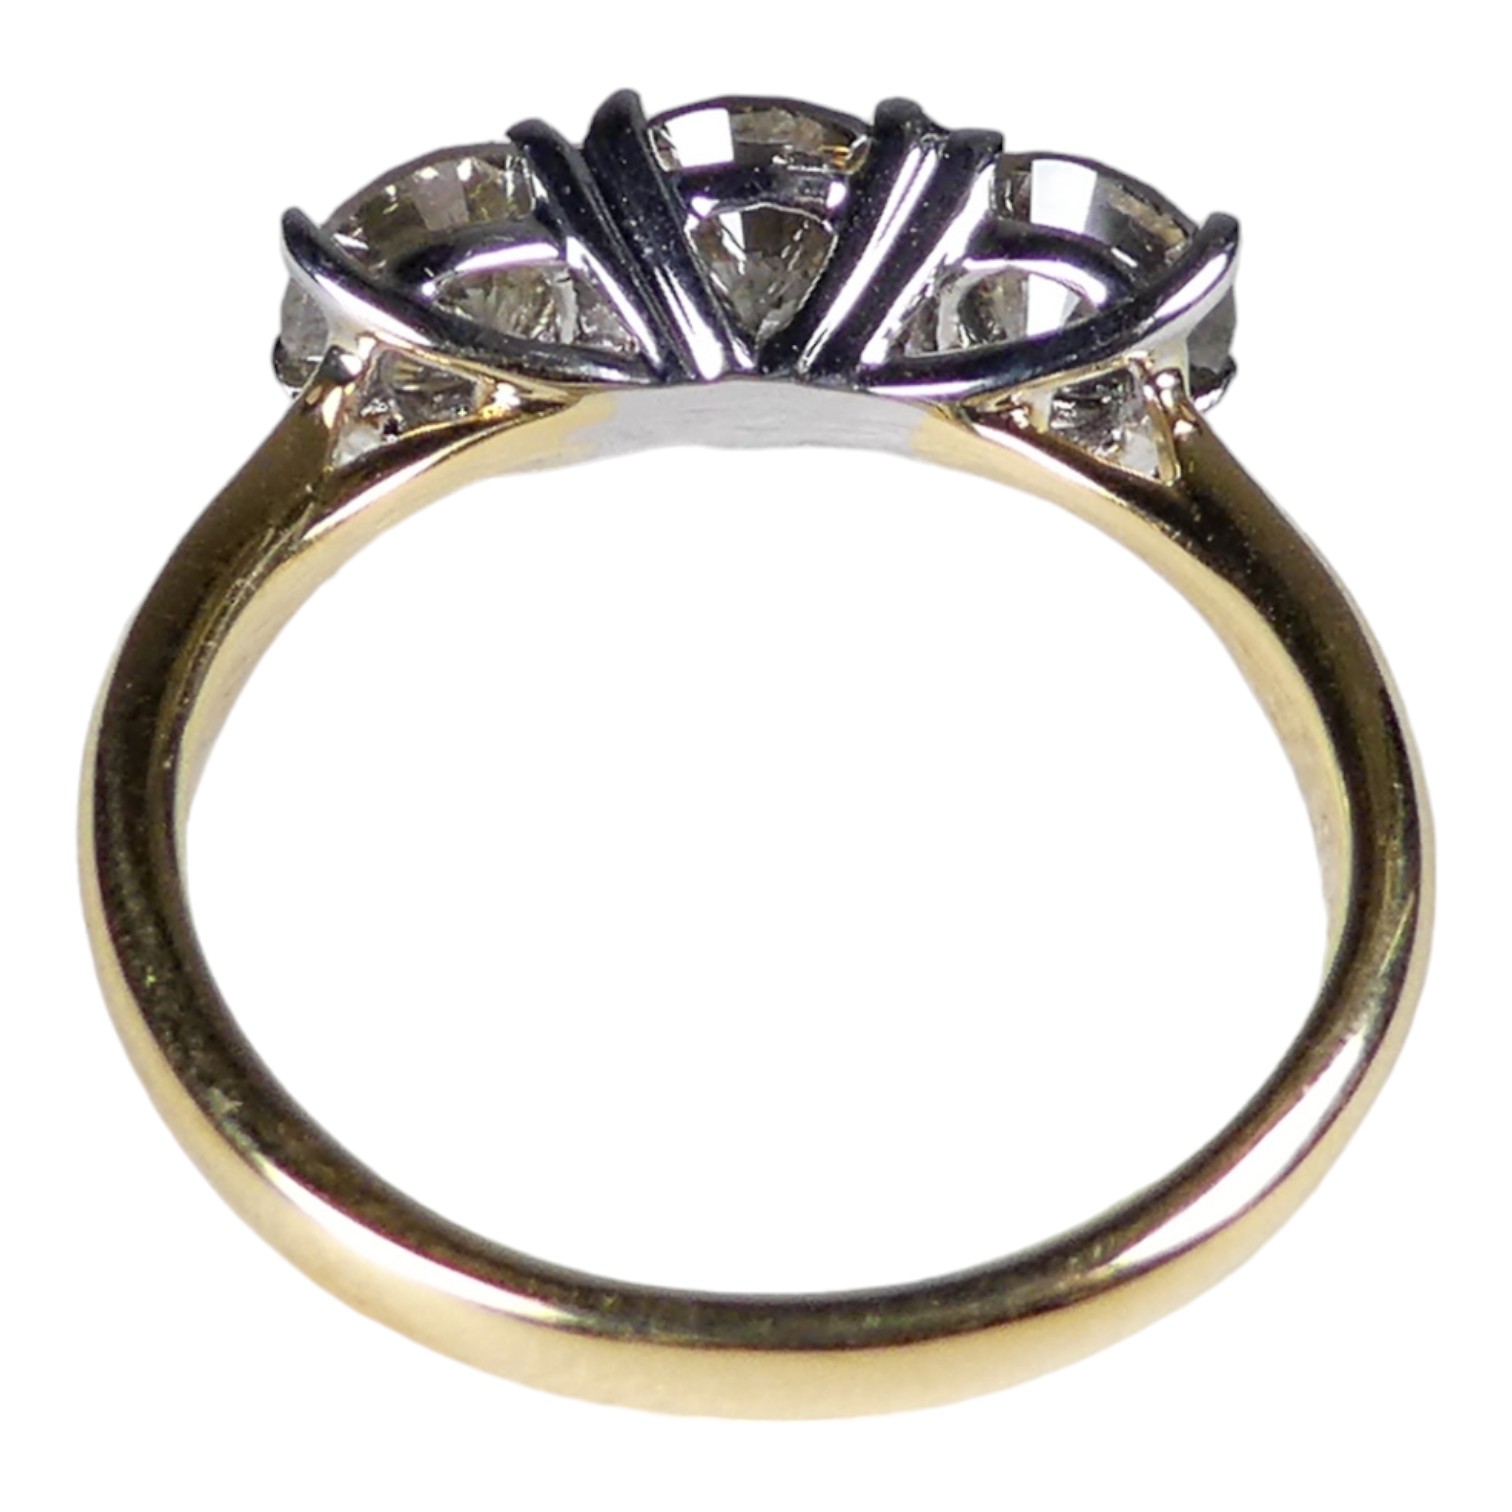 An 18ct white and yellow gold circular brilliant cut three stone diamond ring - diamond weight 1. - Image 2 of 4